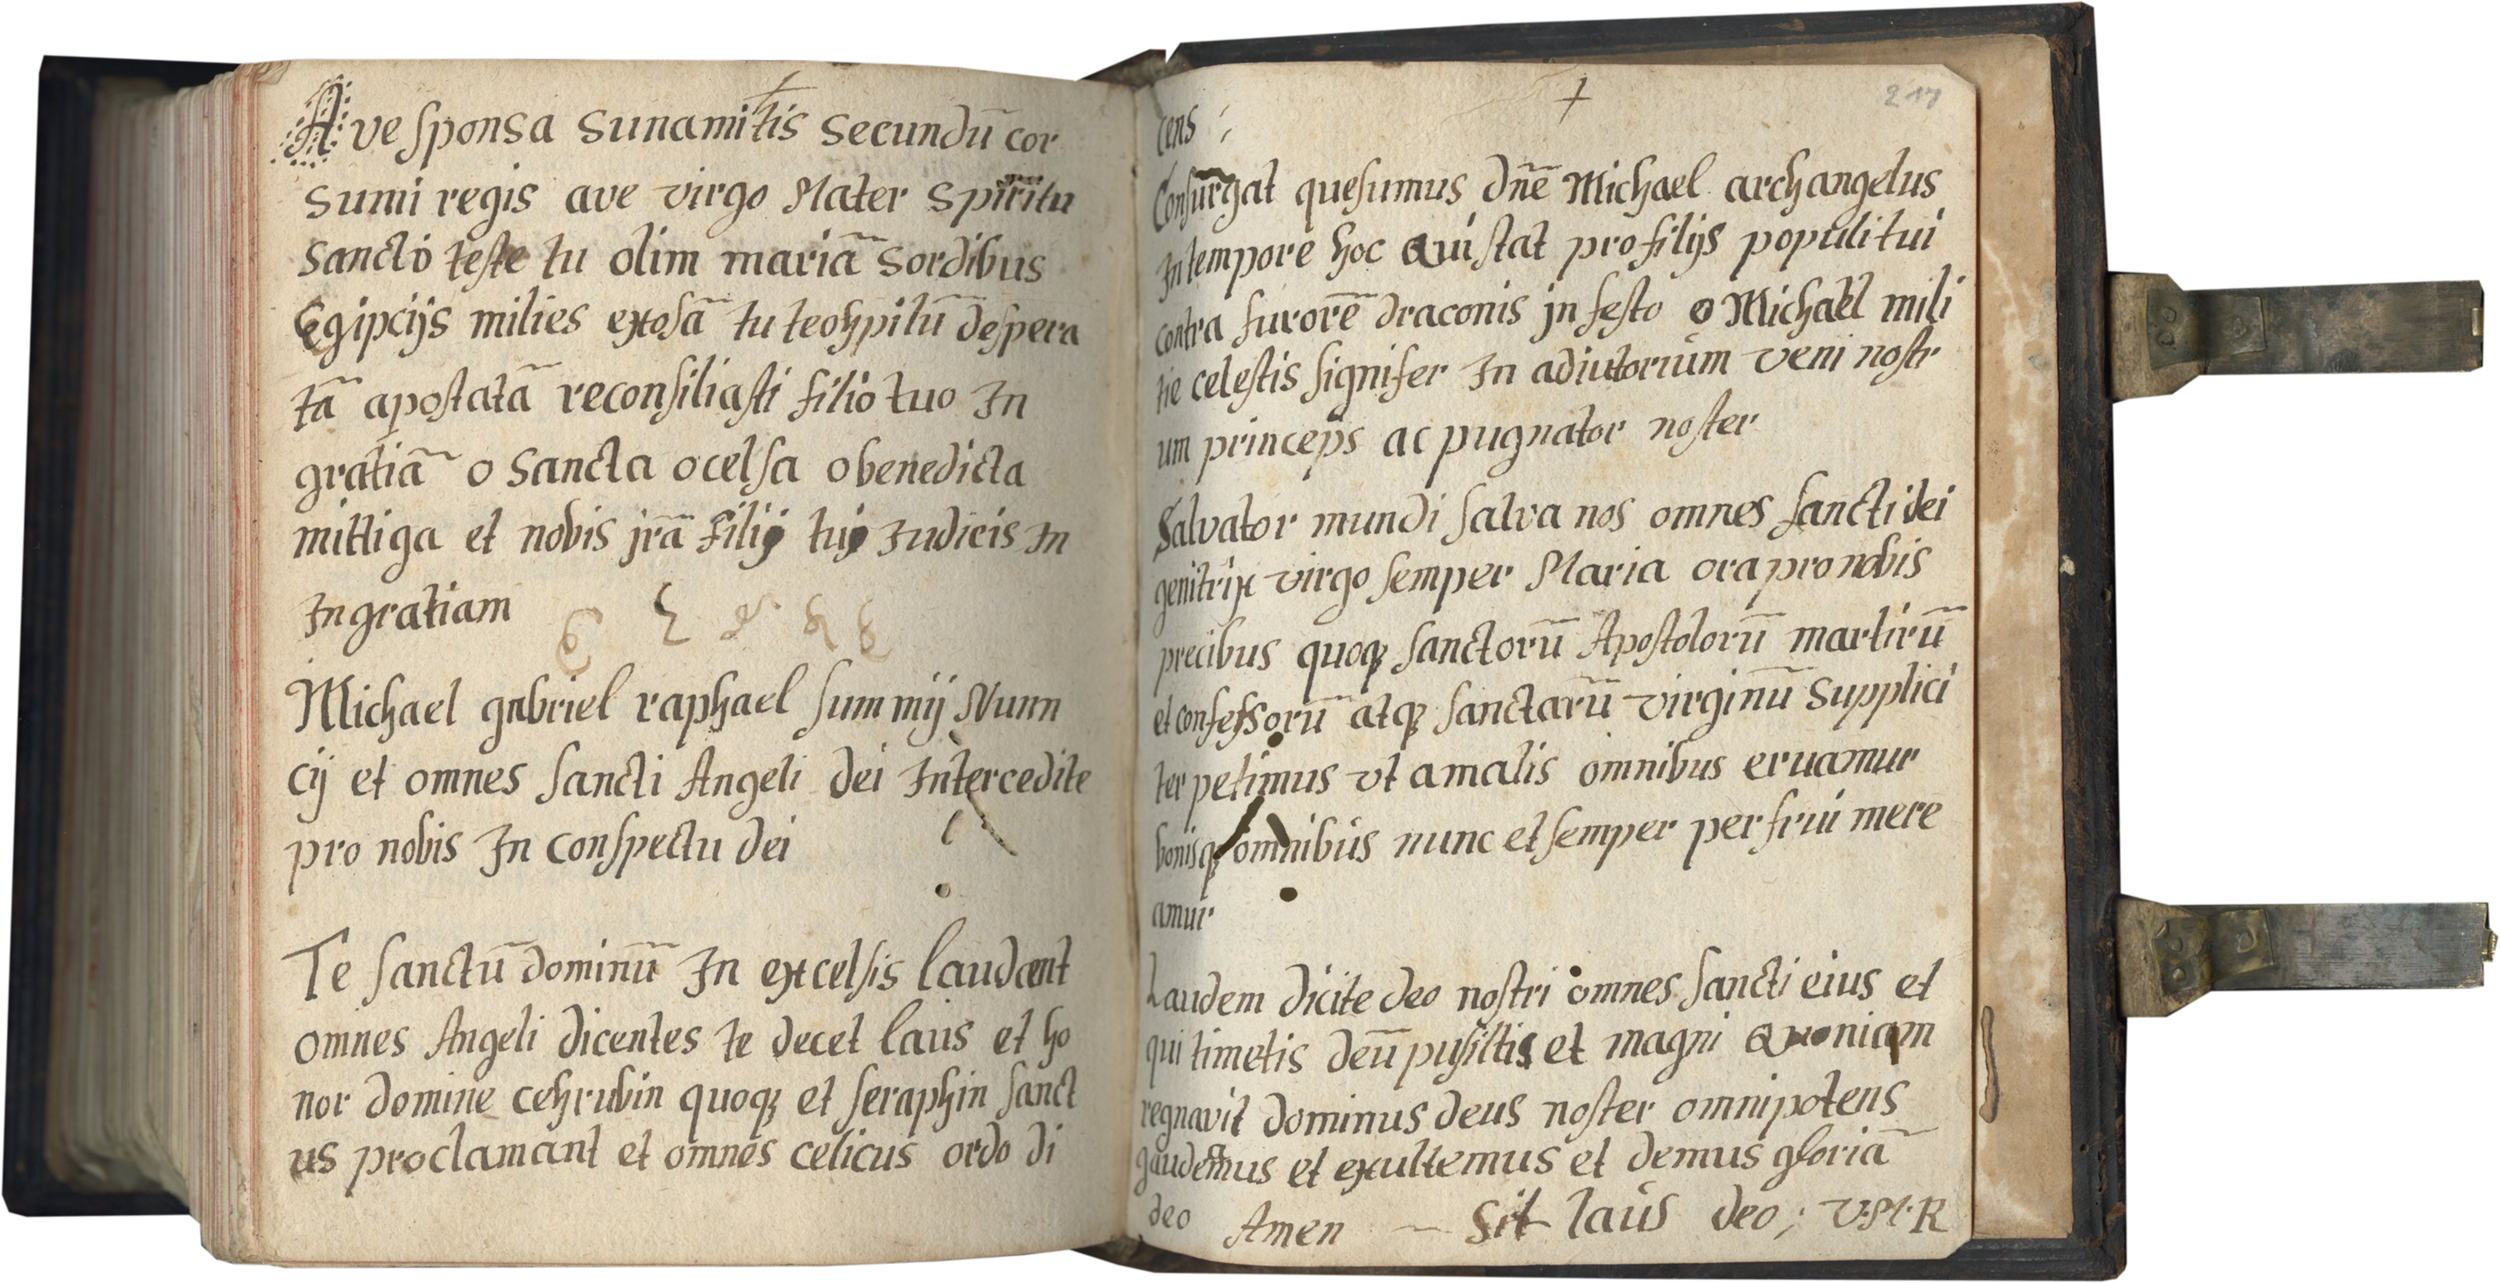 el filibusterismo original manuscript